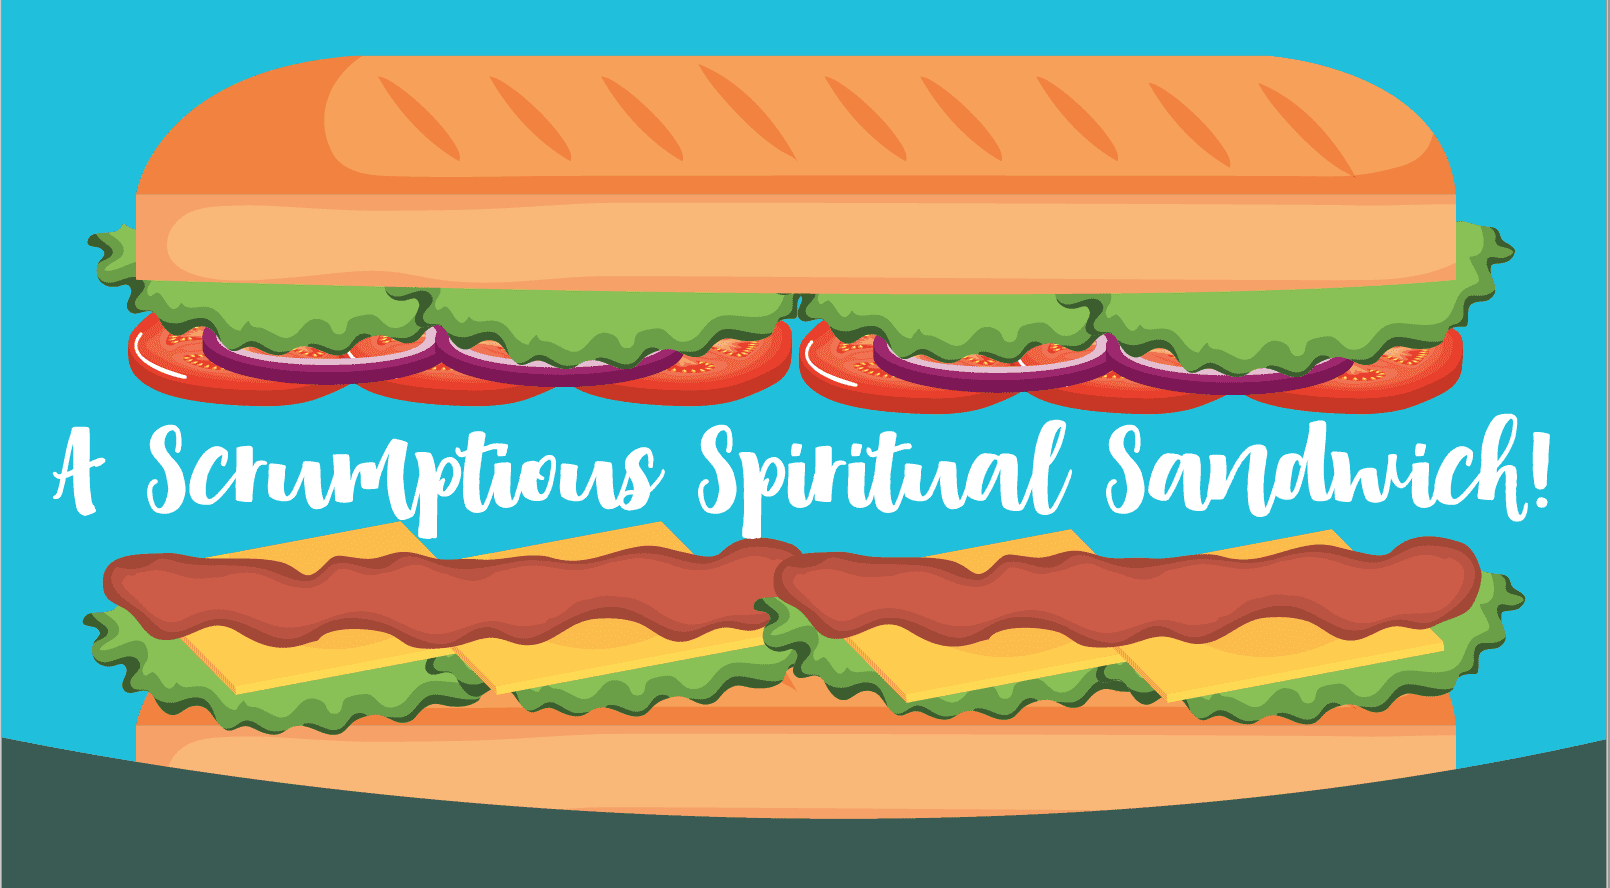 A Scrumptious Spiritual Sandwich!